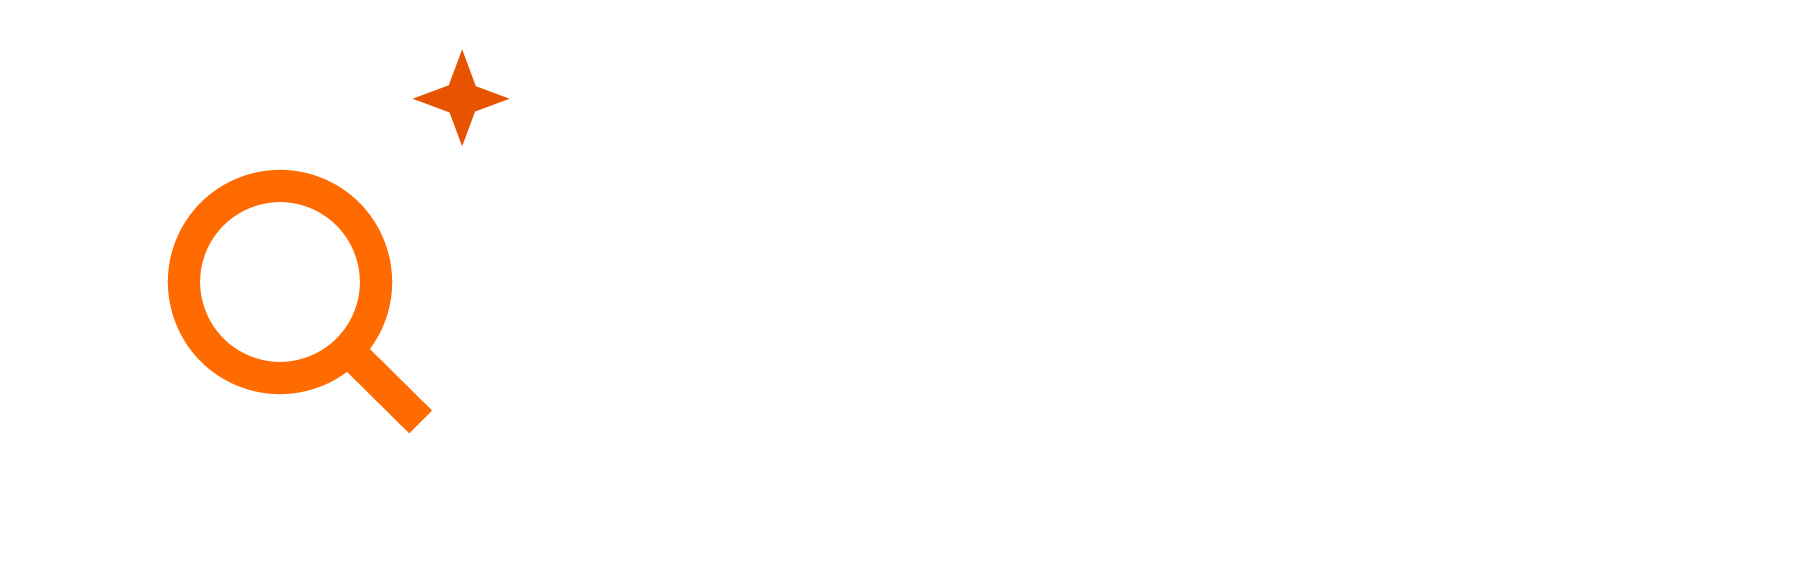 Cellebrite Pathfinder courses